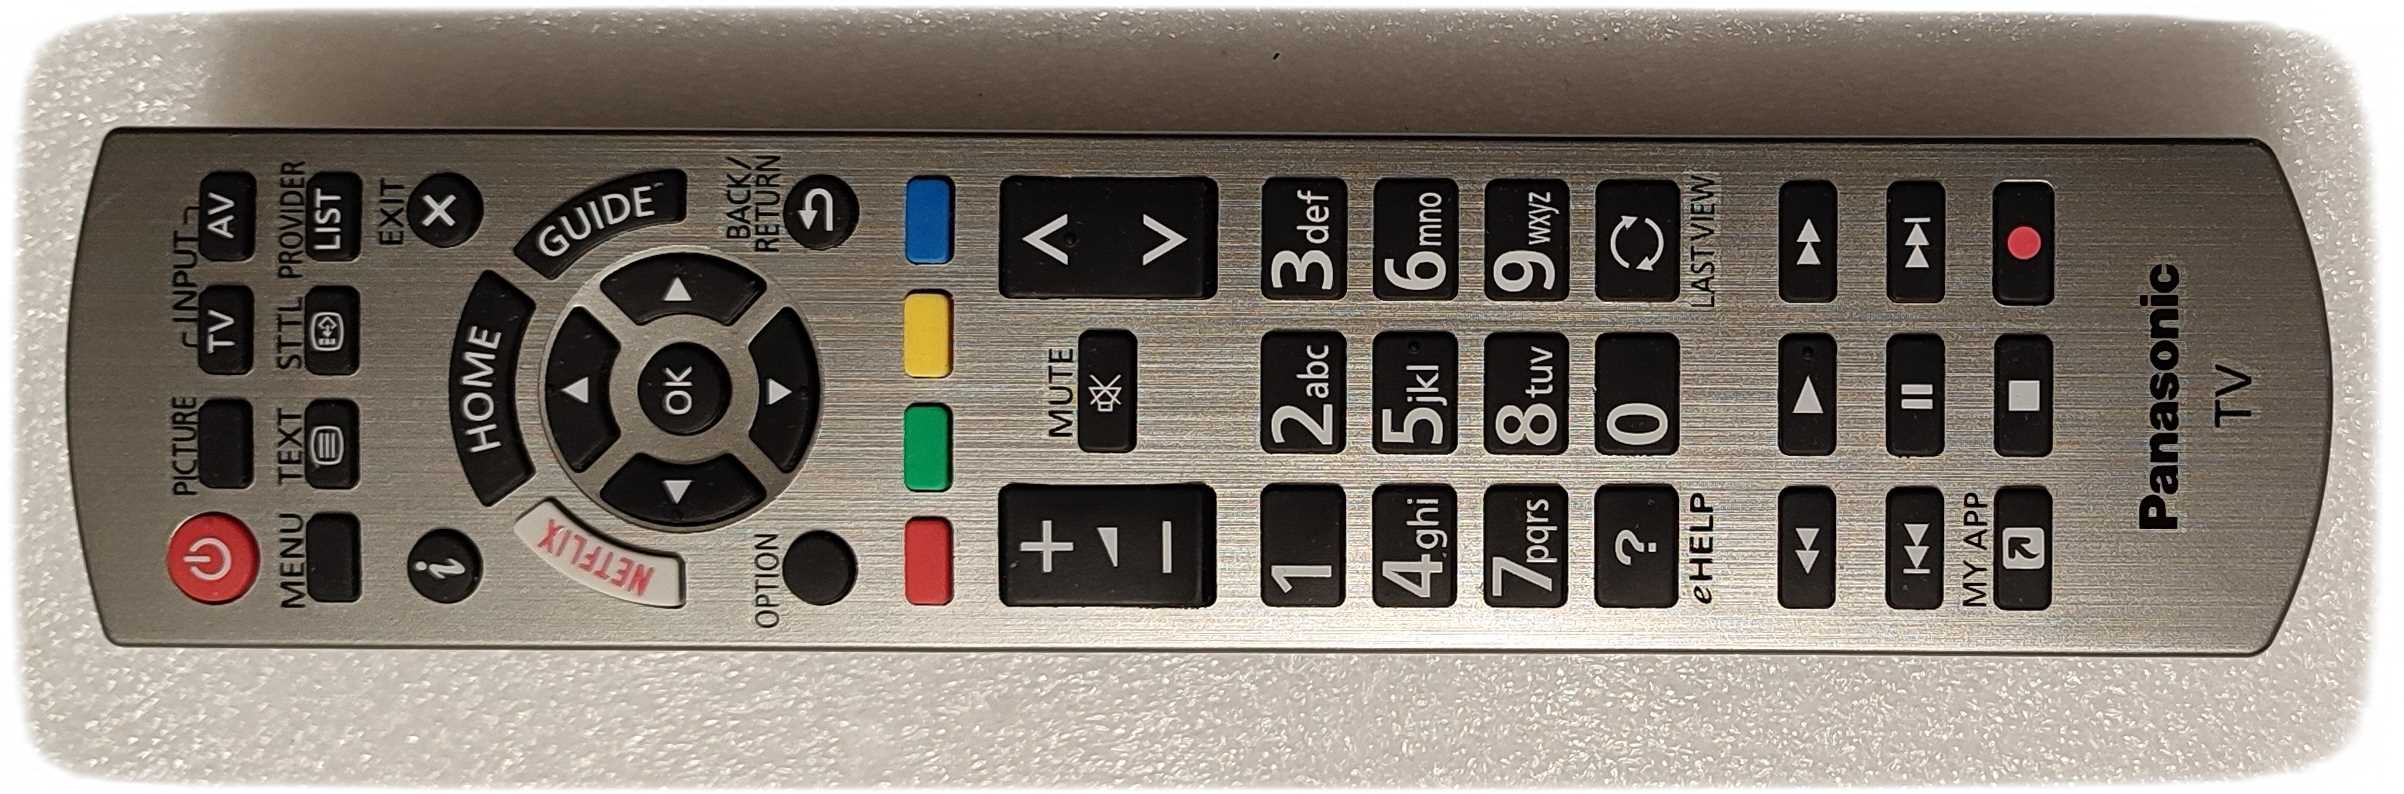 N2QAYB001247 - Panasonic Mando a Distancia TV TX-58HX810E - Módulos TV